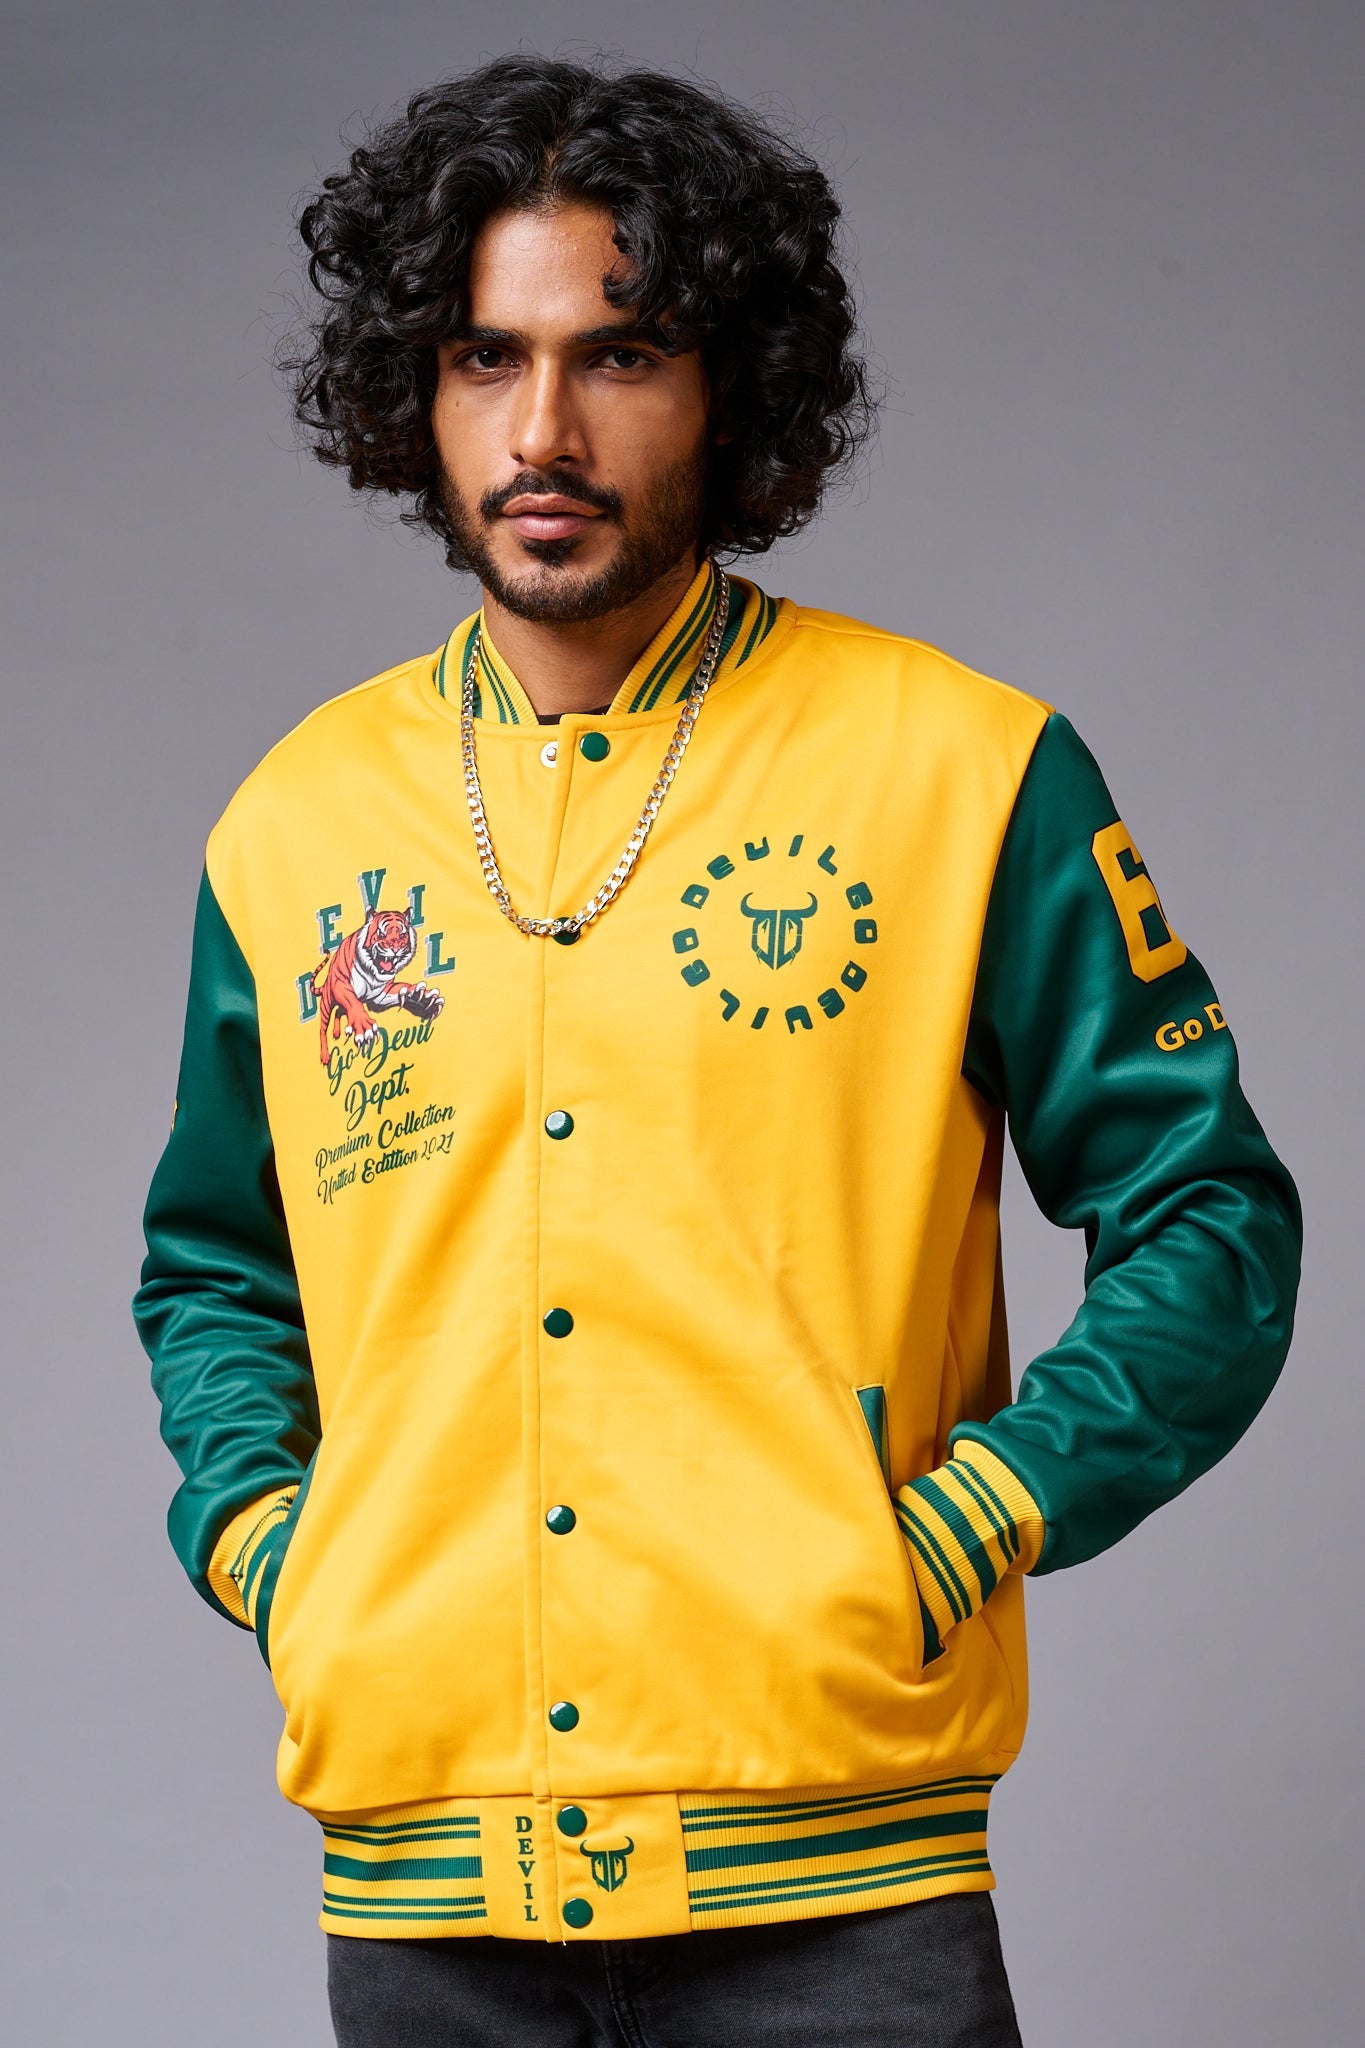 Tiger Printed Yellow & Green Varsity Jacket for Men - Go Devil XL